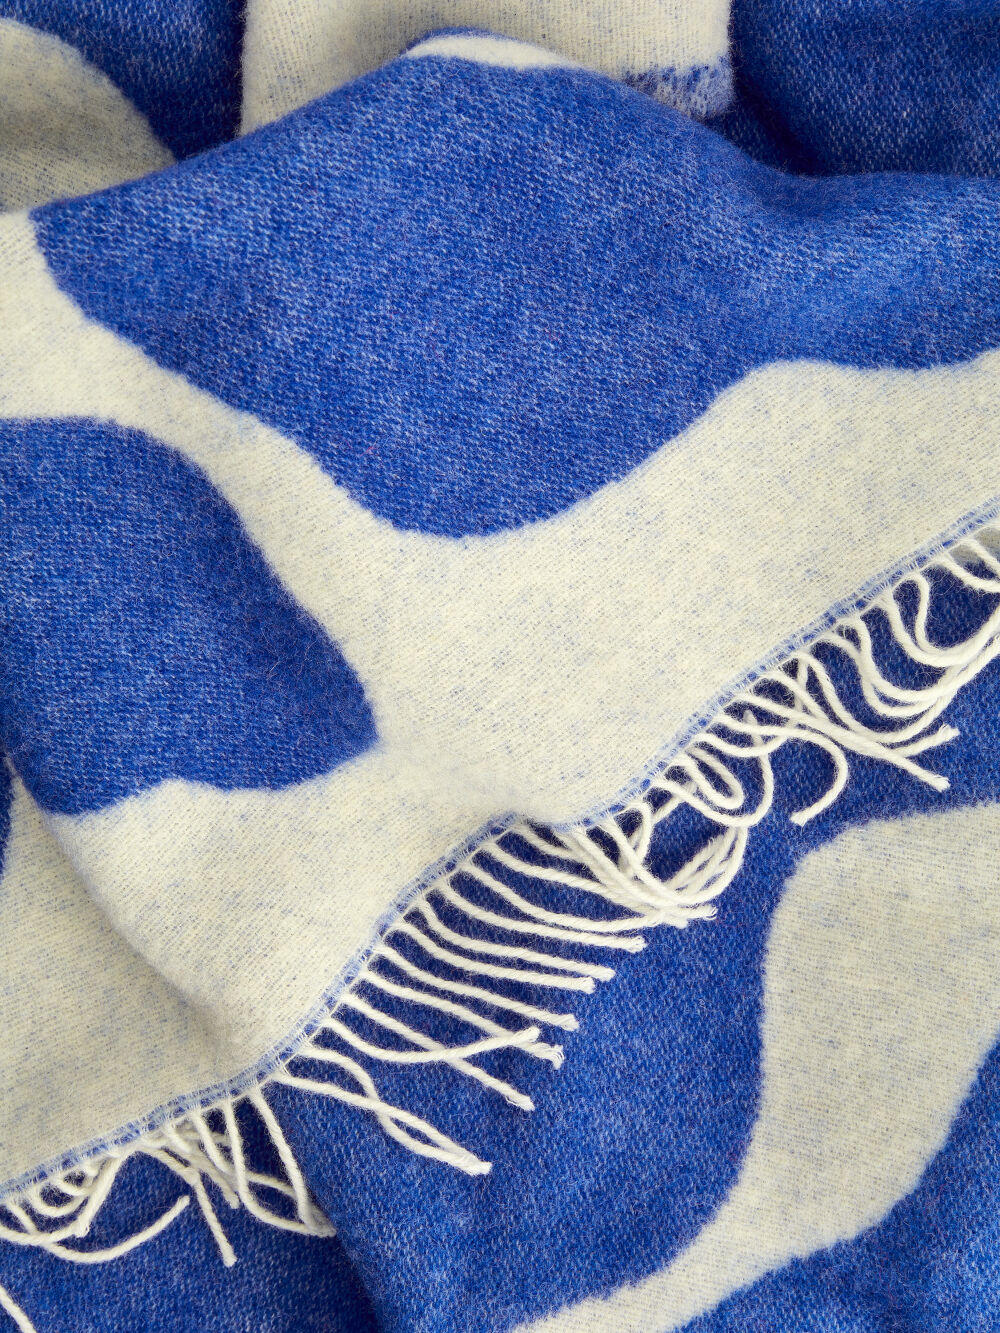 Blue blanket pattern by Linnéa Andersson